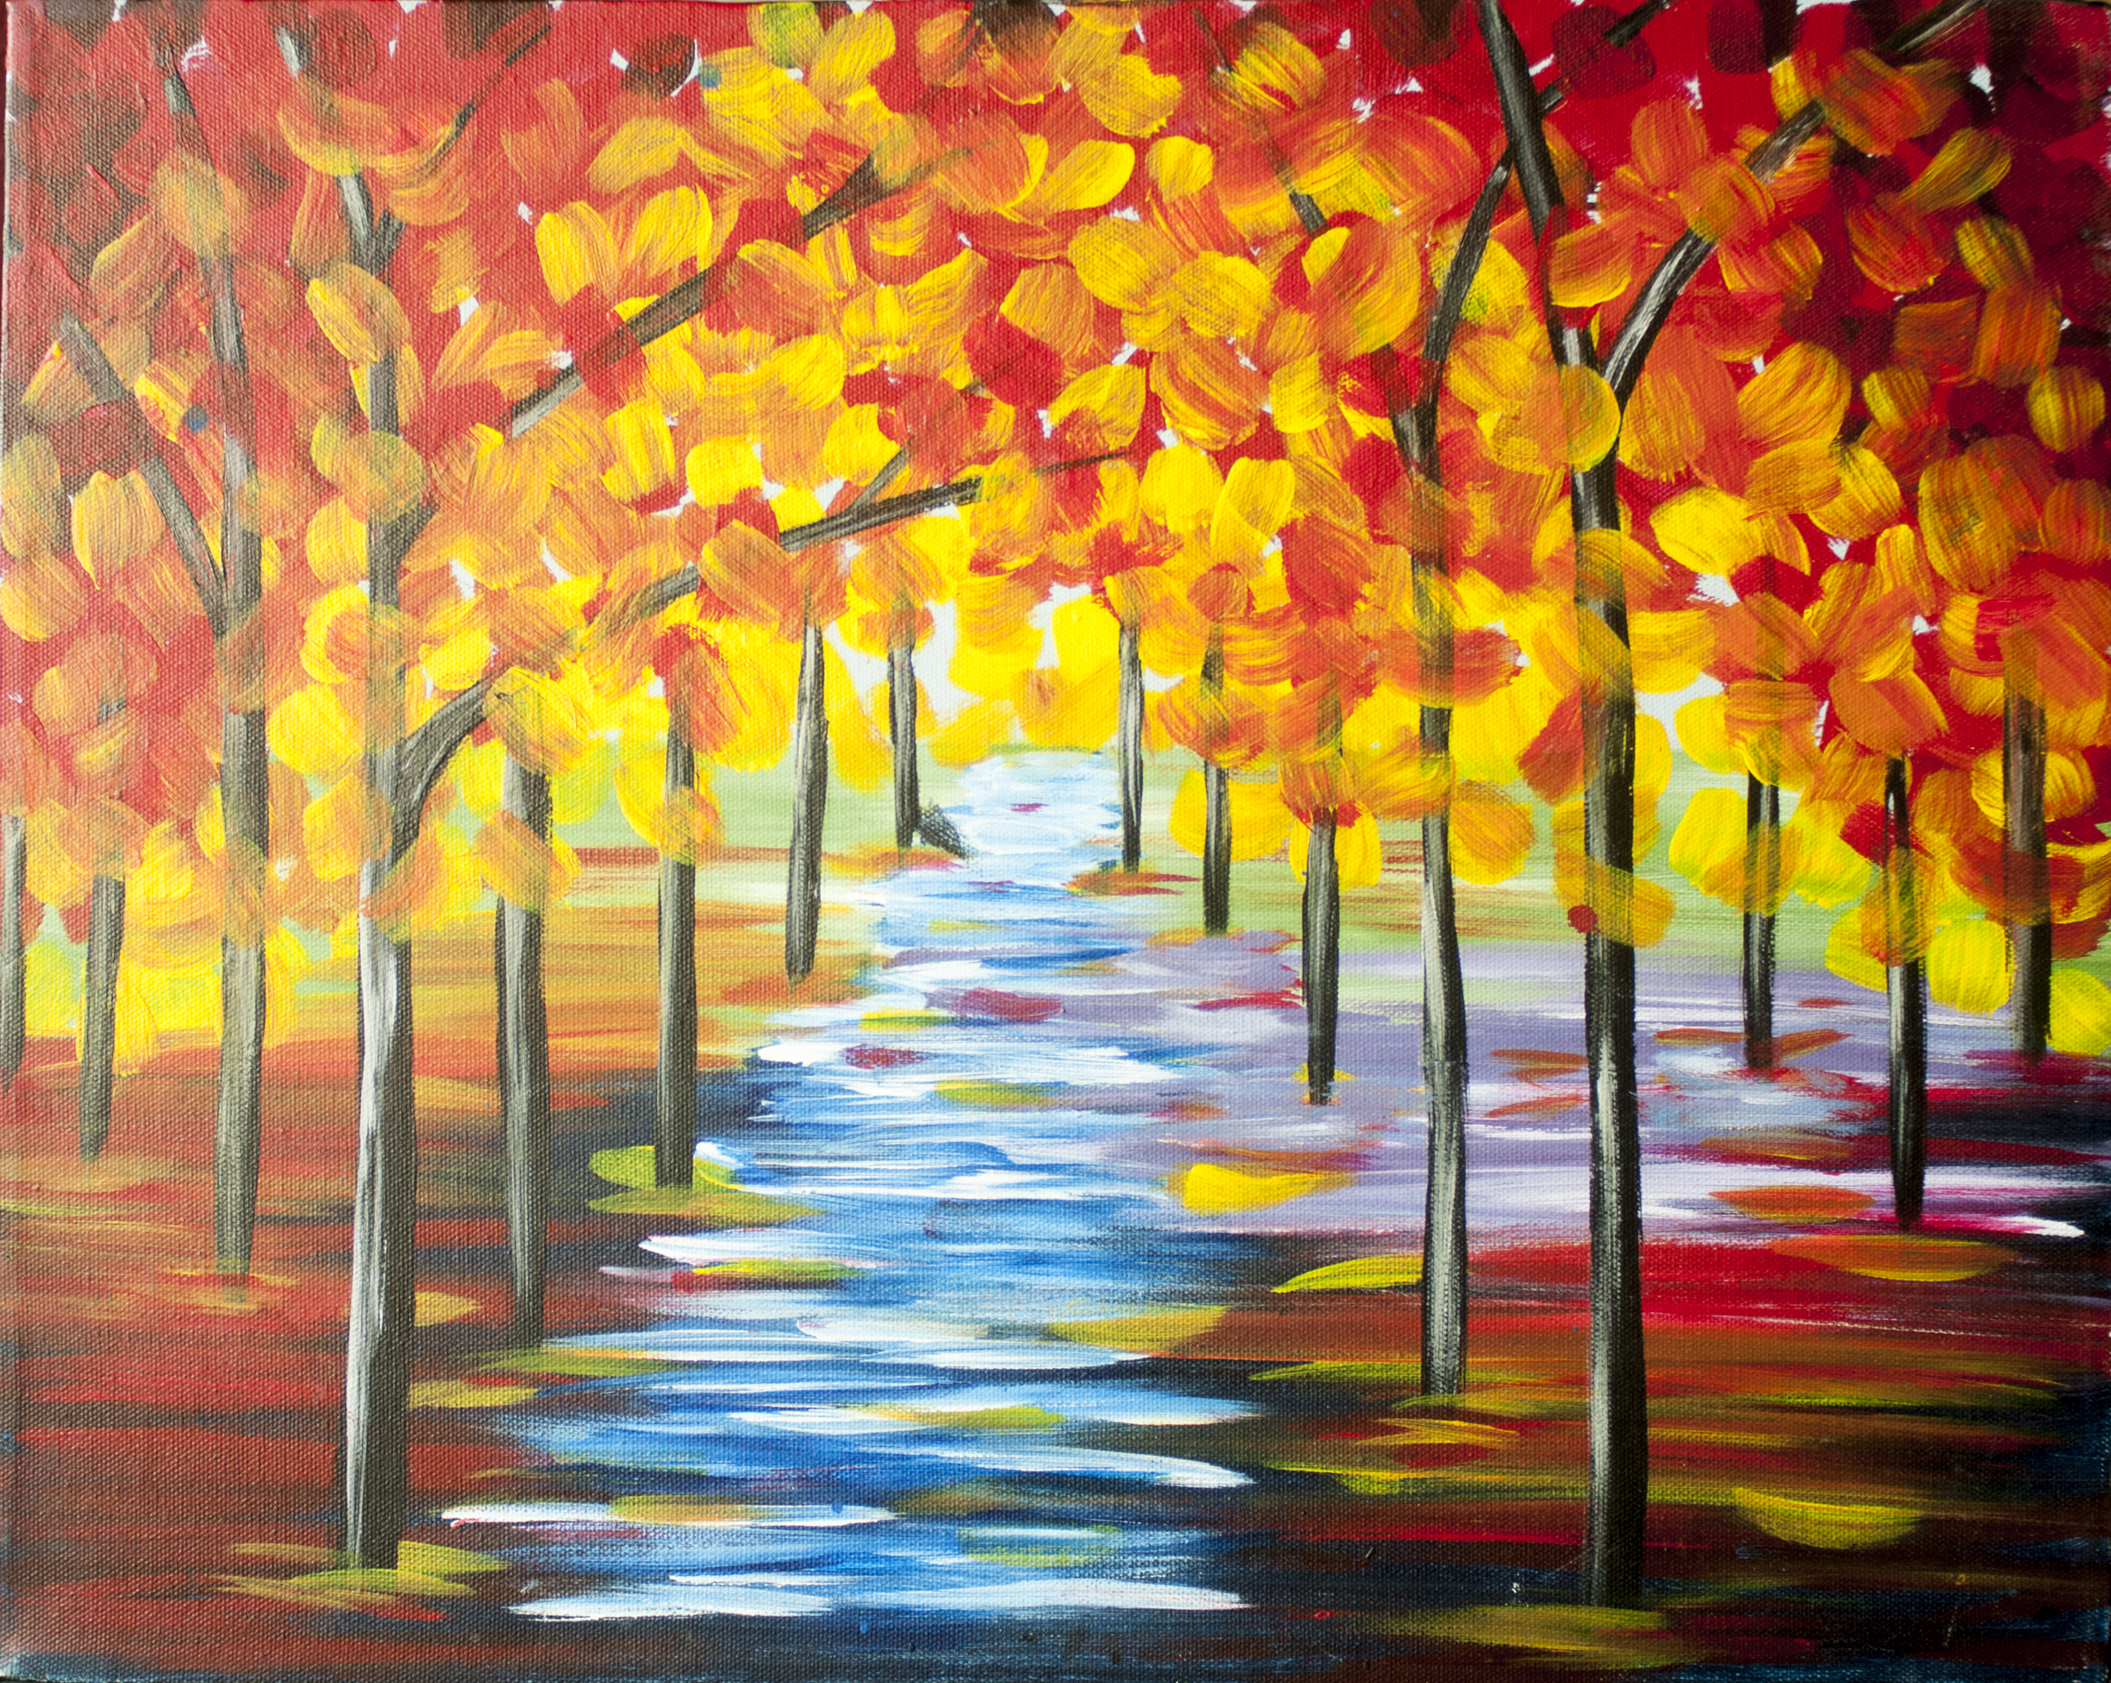 Autumn Stream - Pinot's Palette Painting